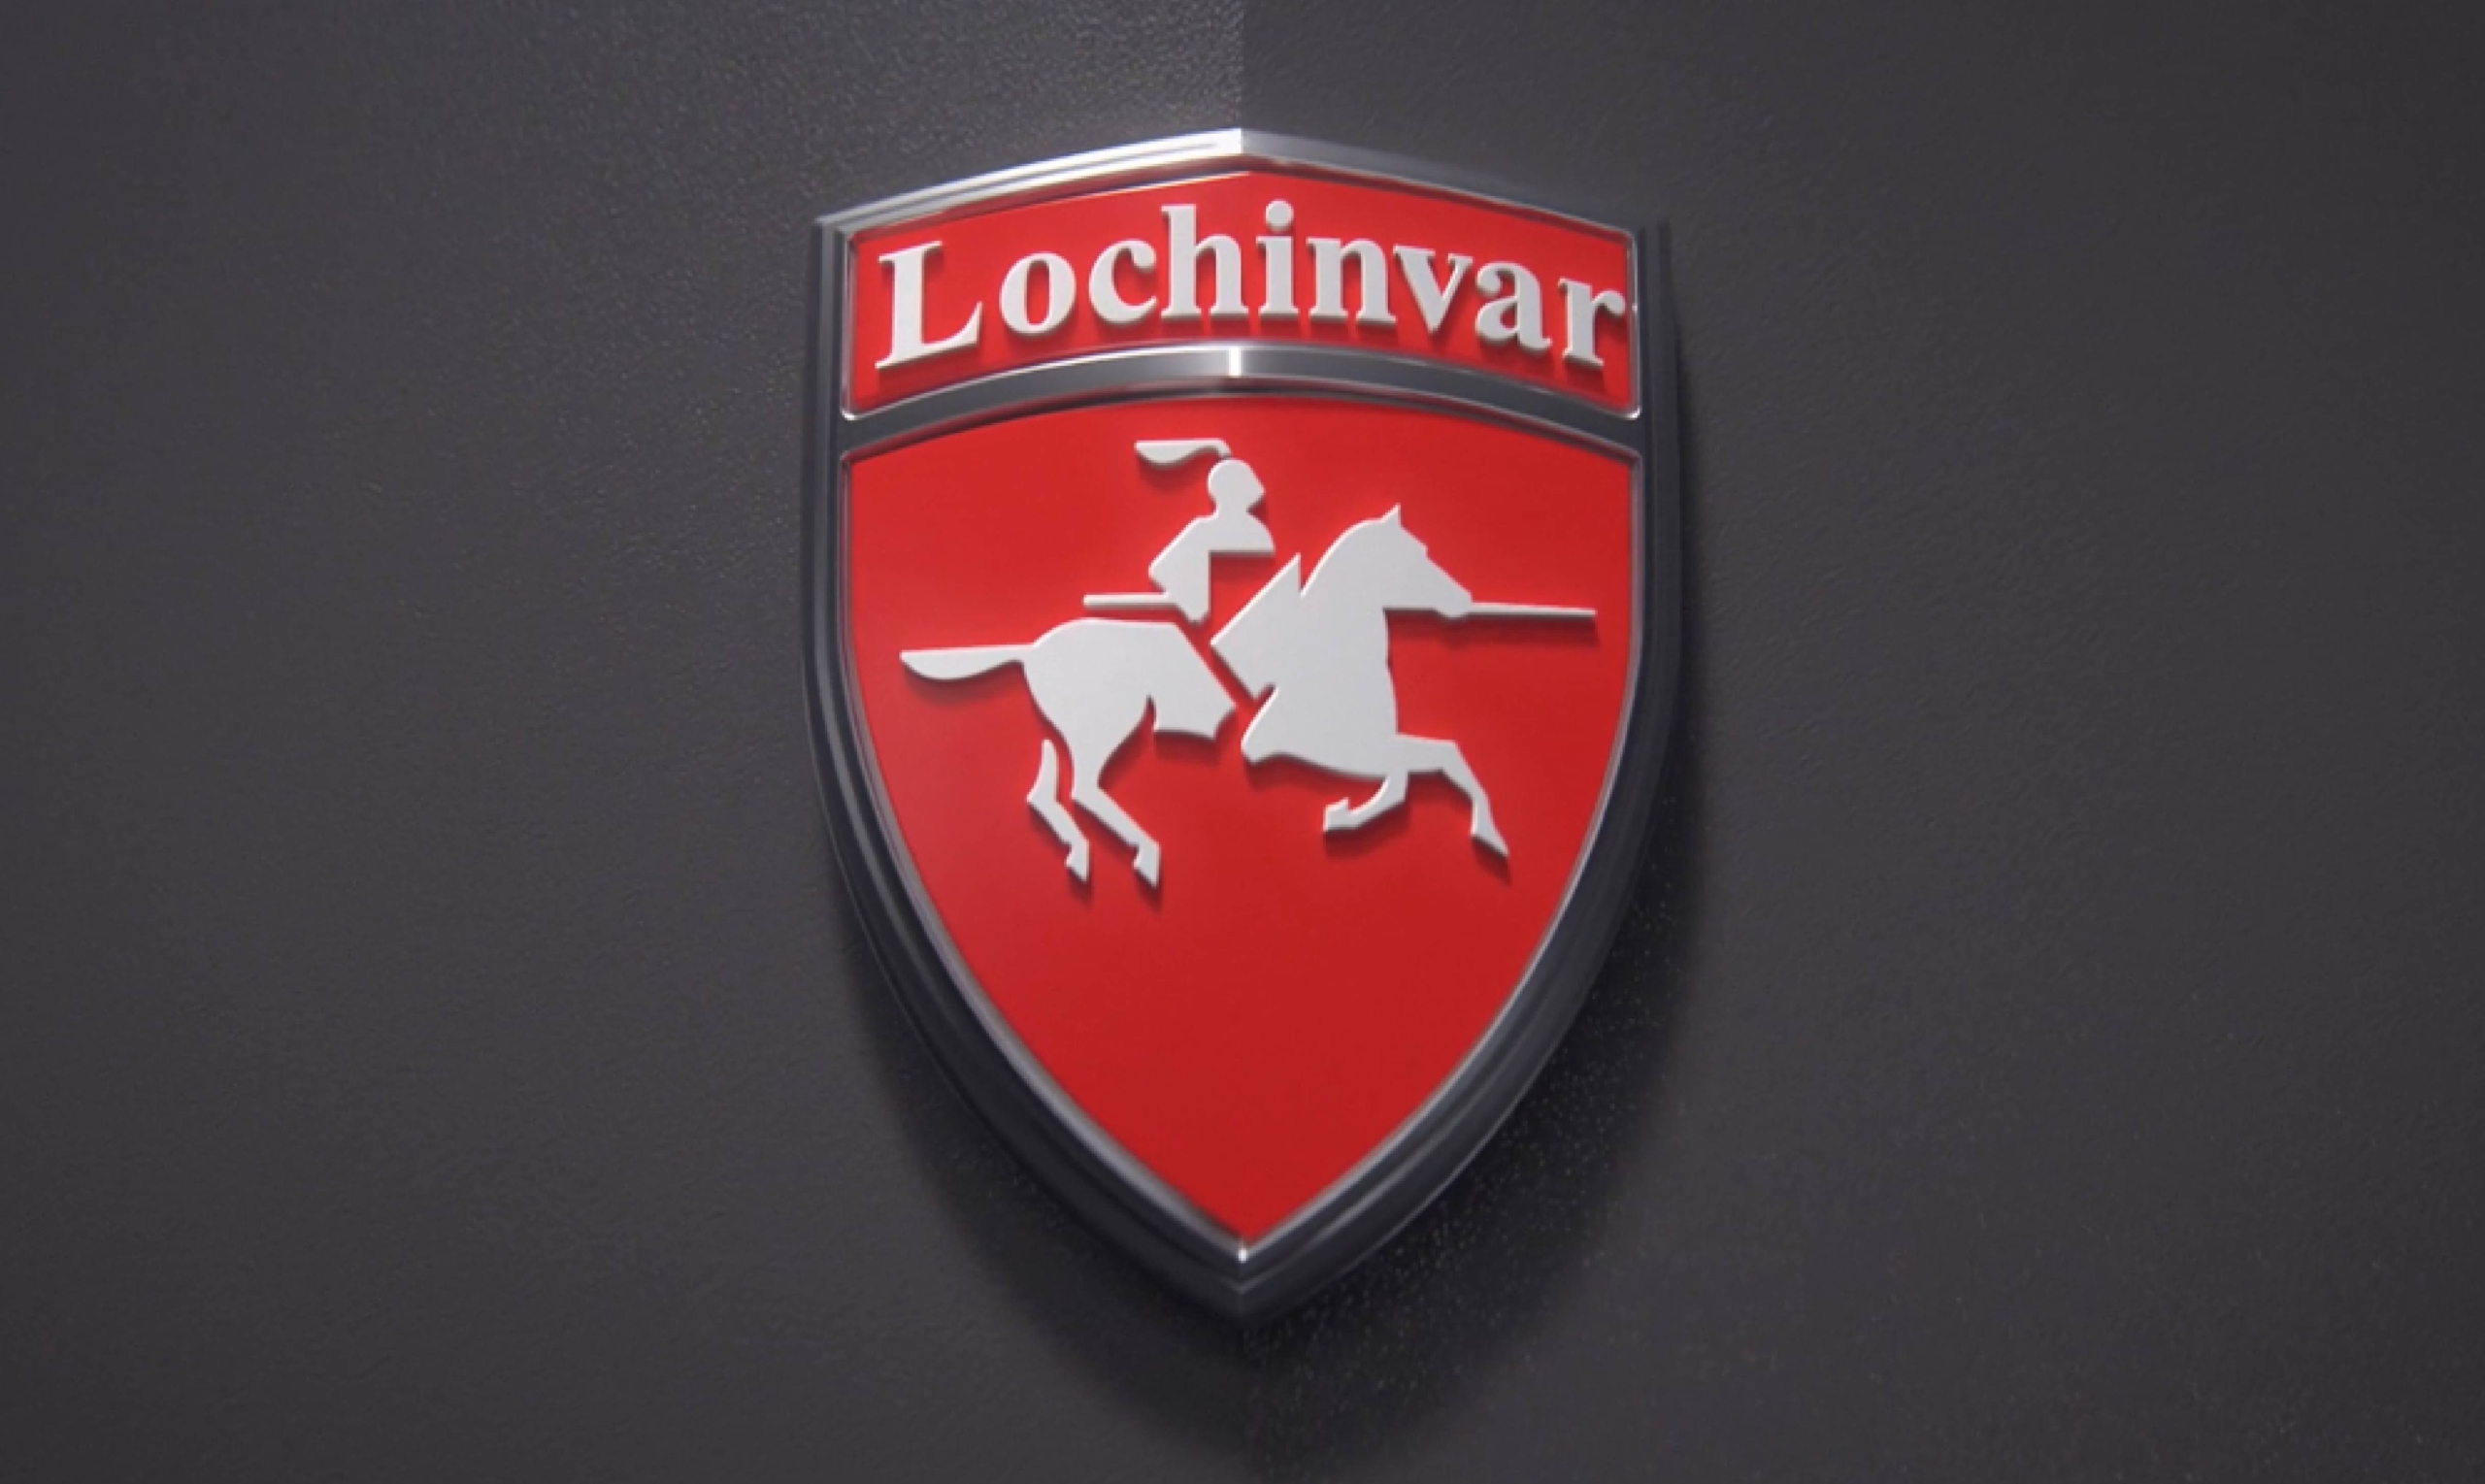 Lochinvar Knight XL